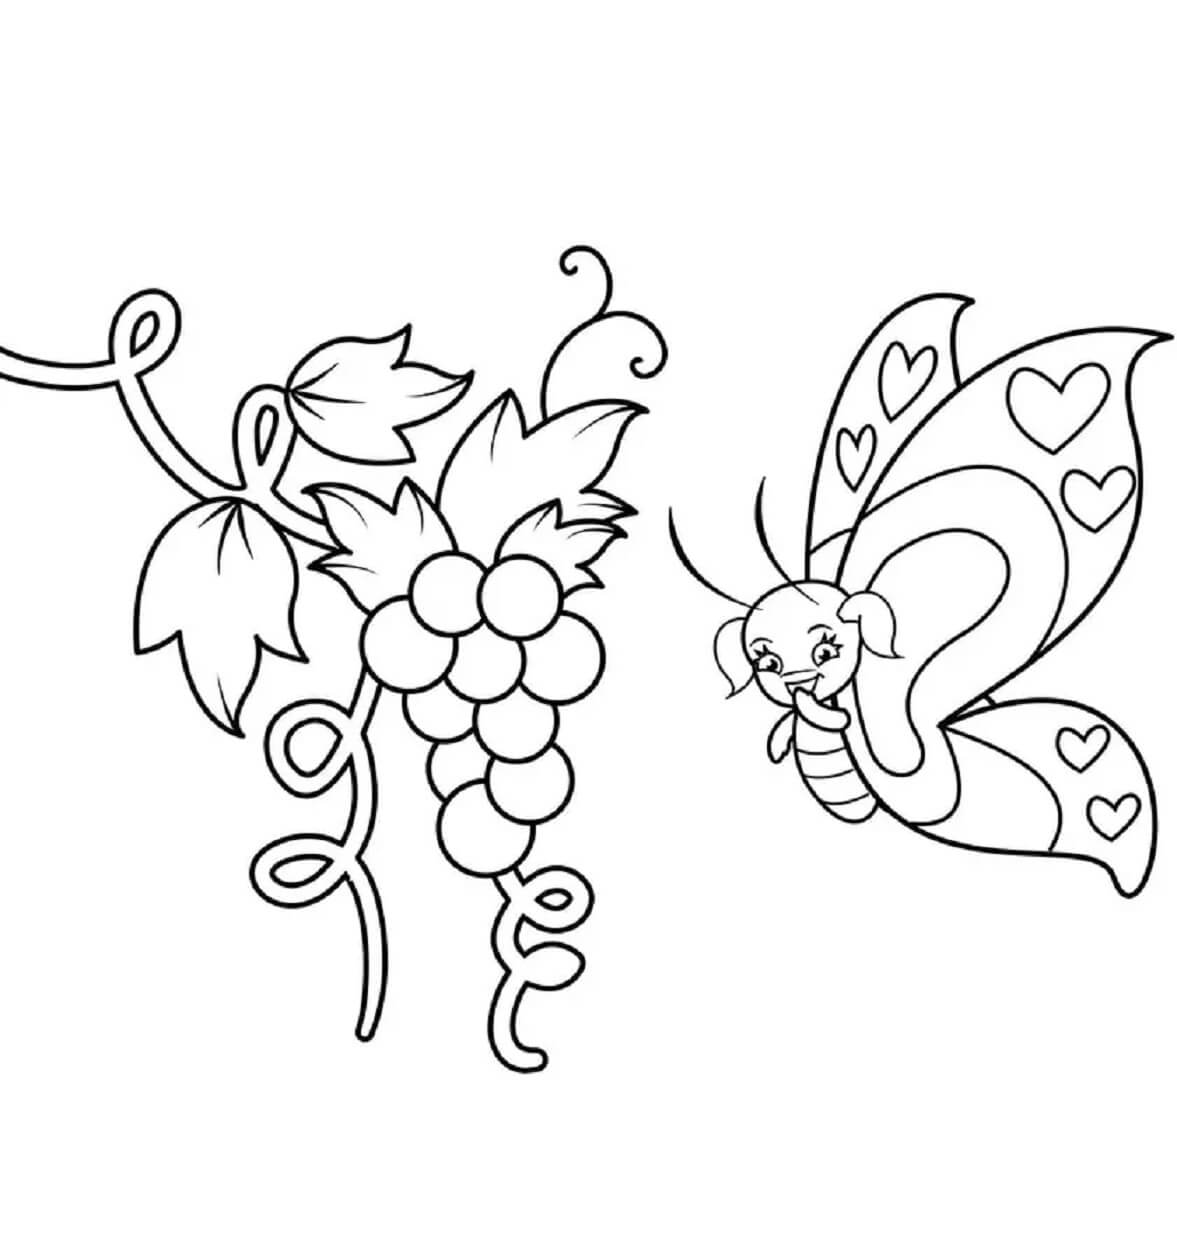 Desenhos de Uvas e Borboleta para colorir